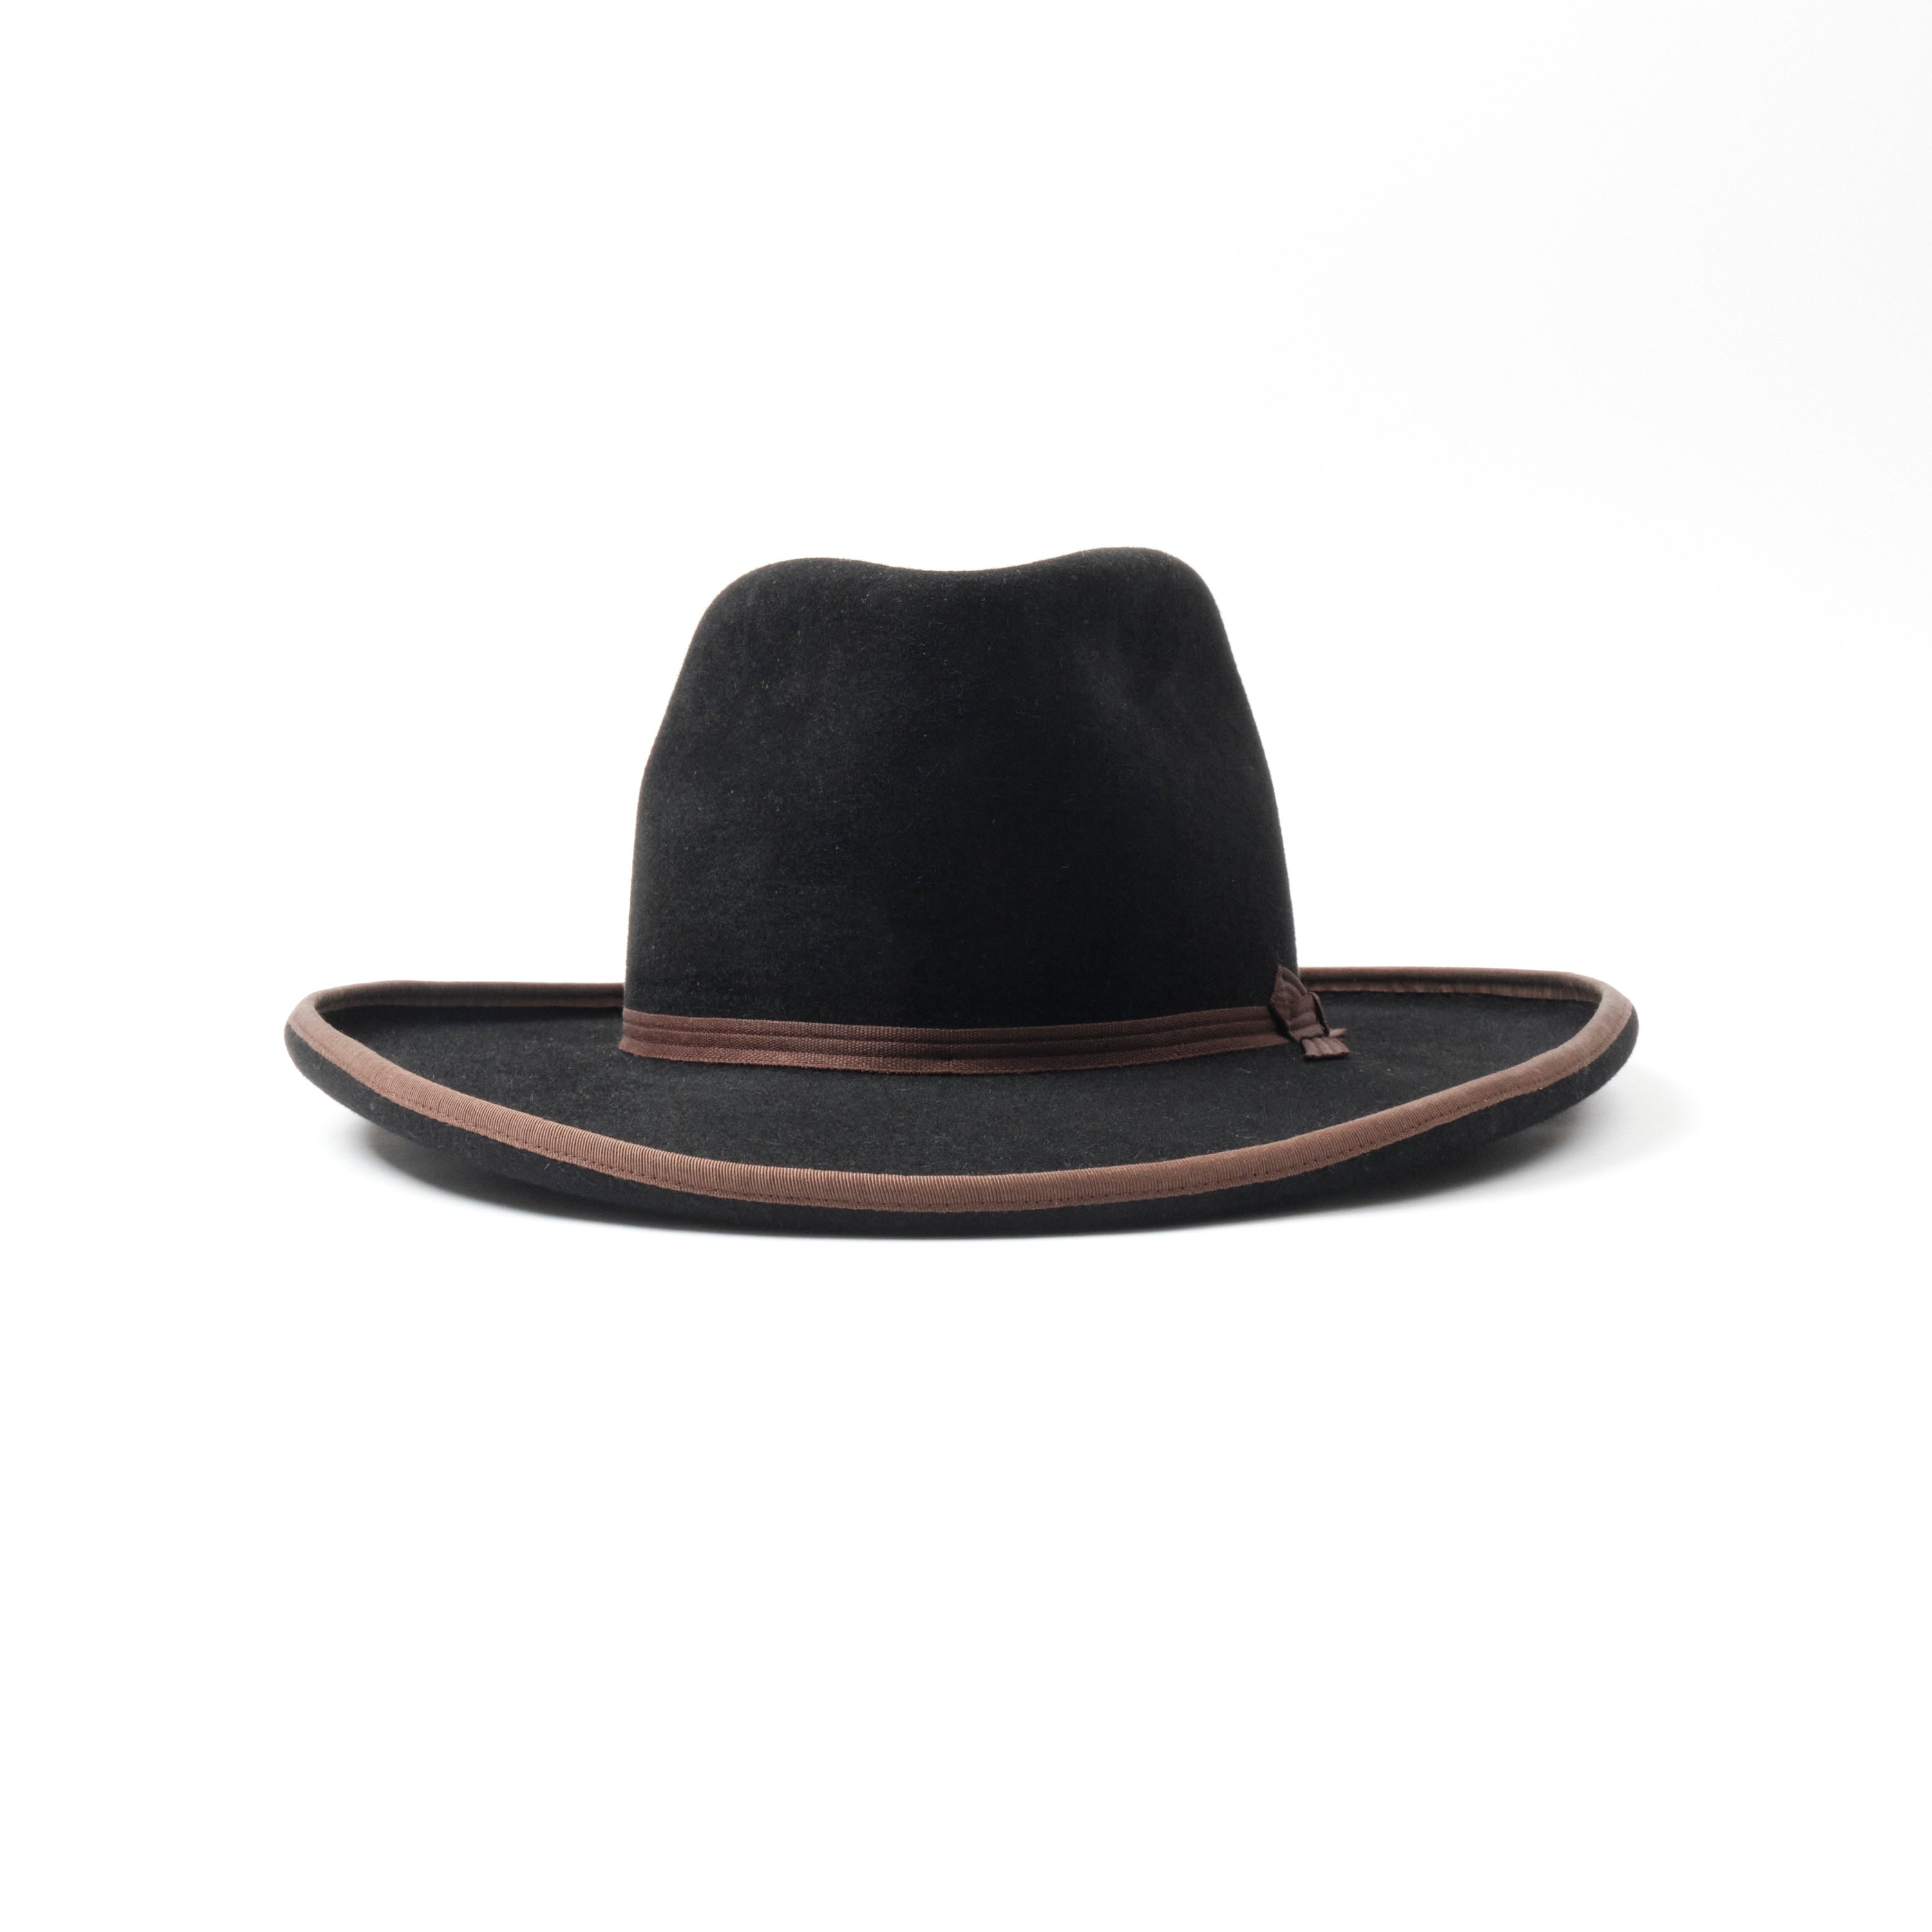 Bowman Hat Co. x Freenote Cloth Aces High